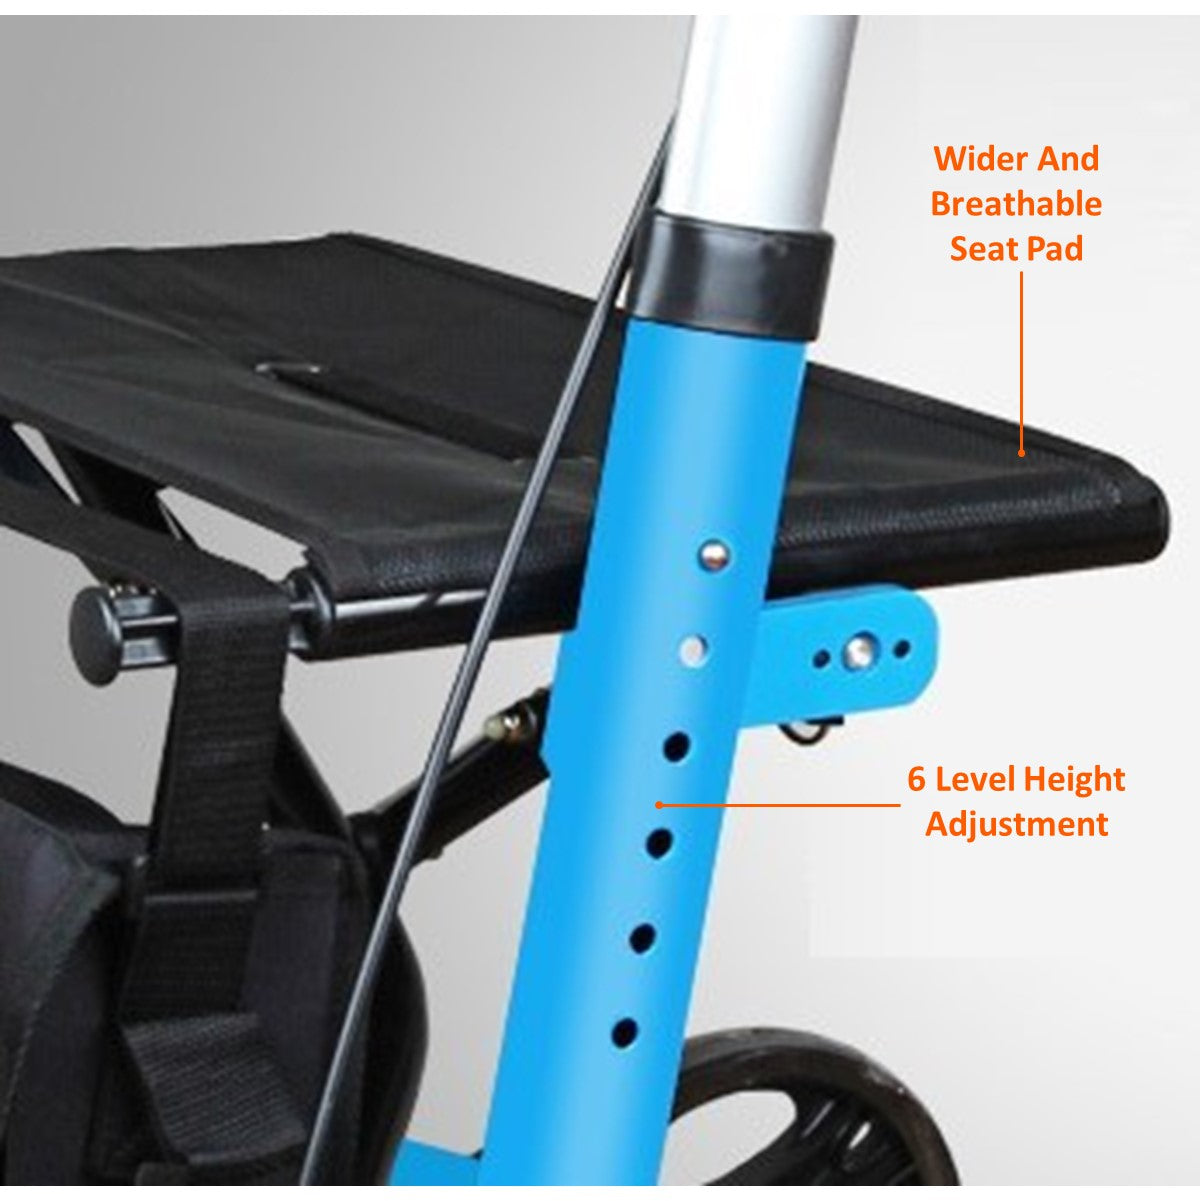 Foldable Elderly Rollator Elderly Walker With Seat, Basket and Wheels